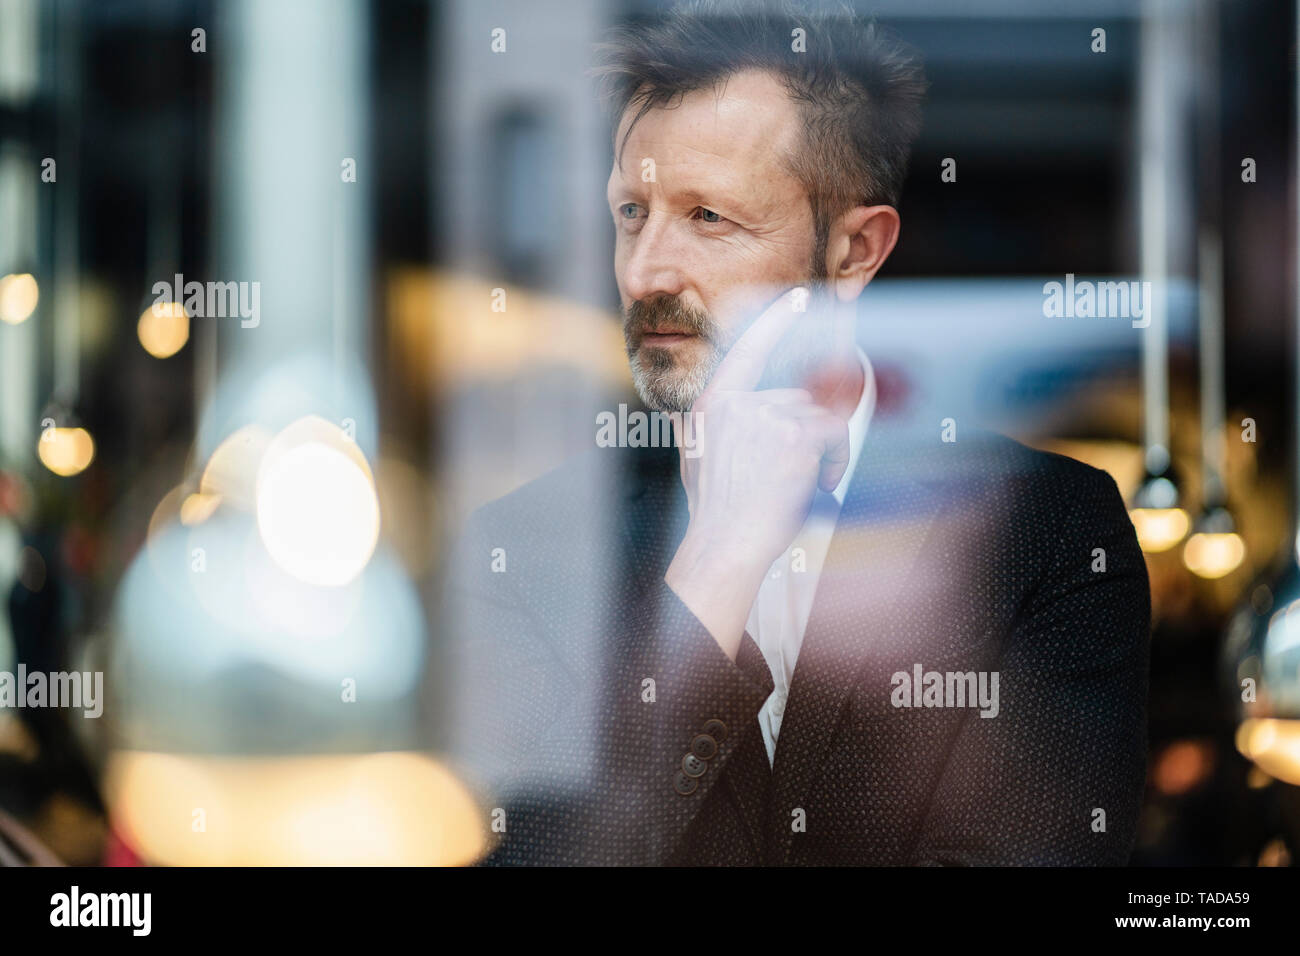 Portrait of pensive mature businessman behind window pane Stock Photo